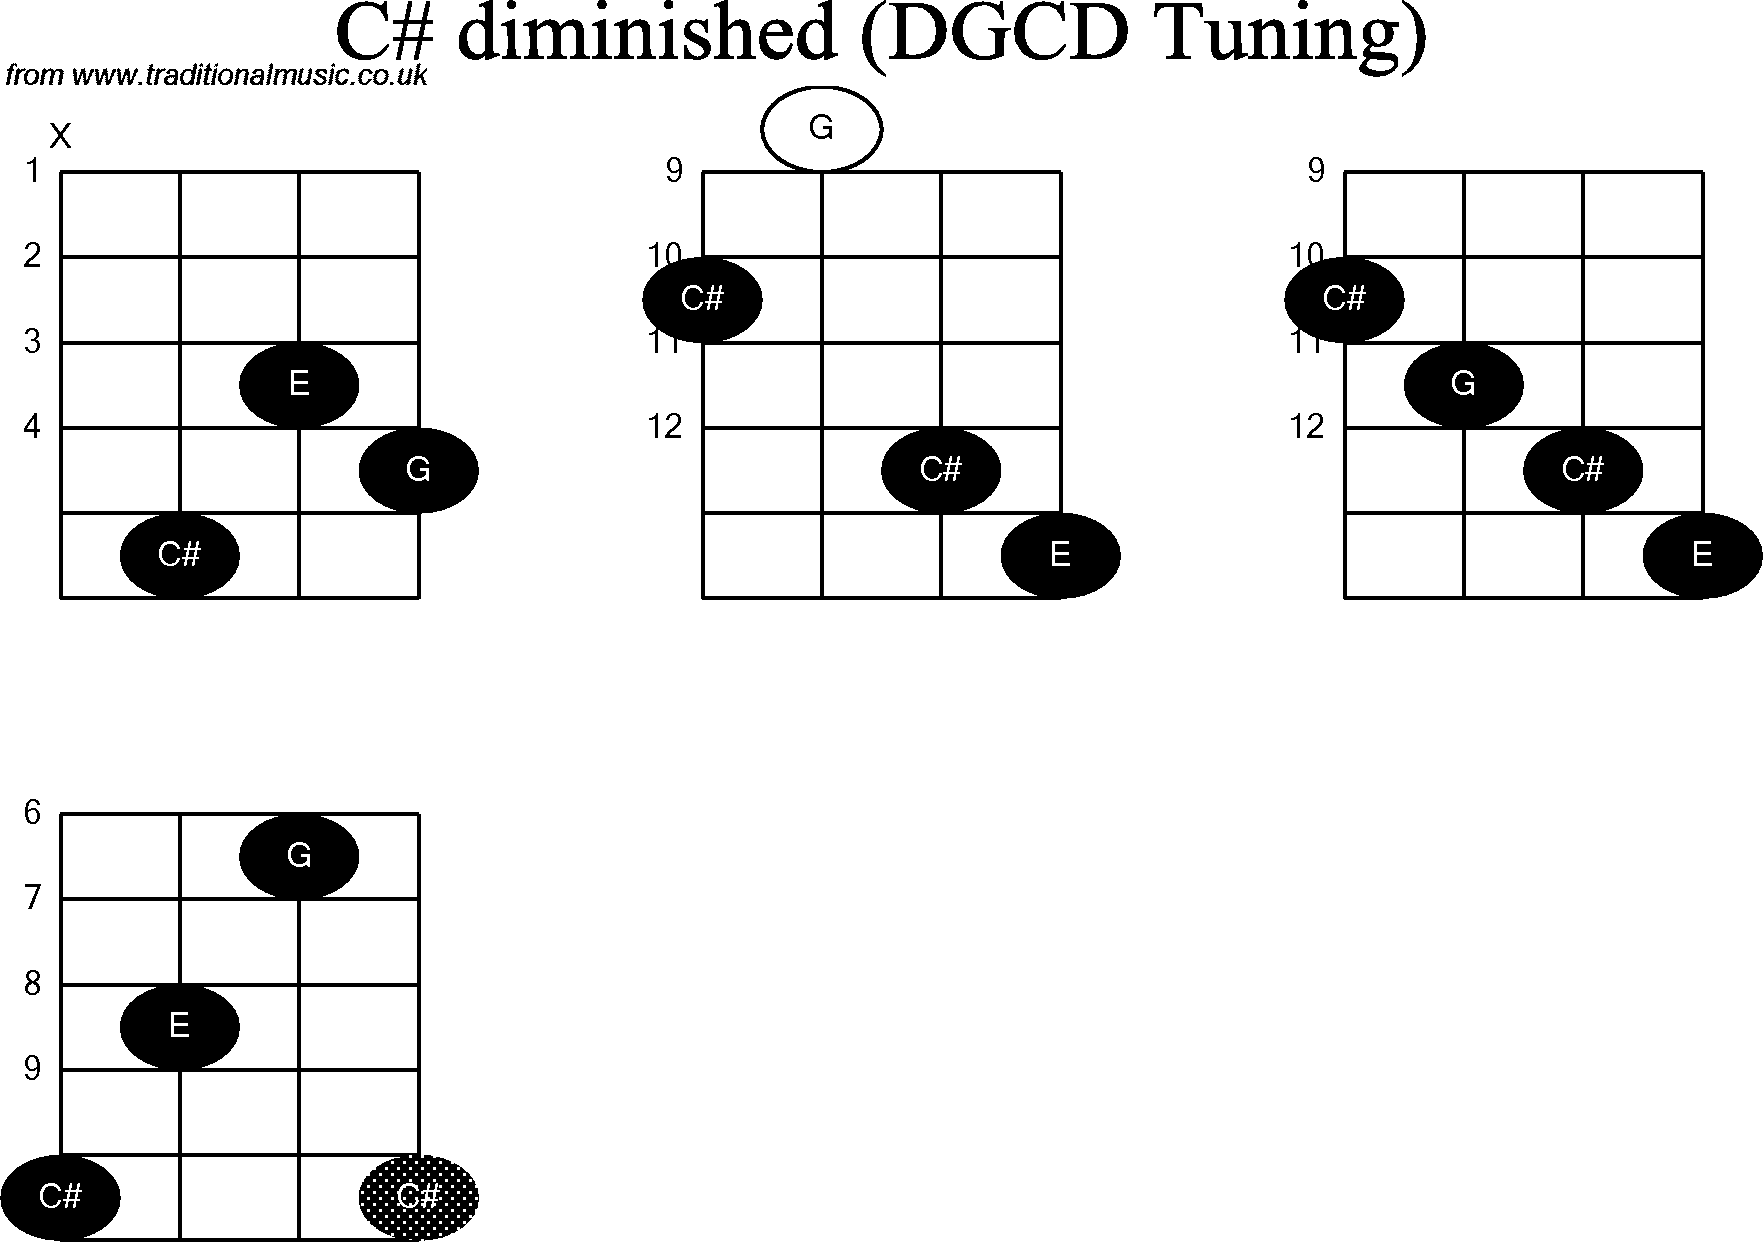 Chord diagrams for Banjo(G Modal) C# Diminished